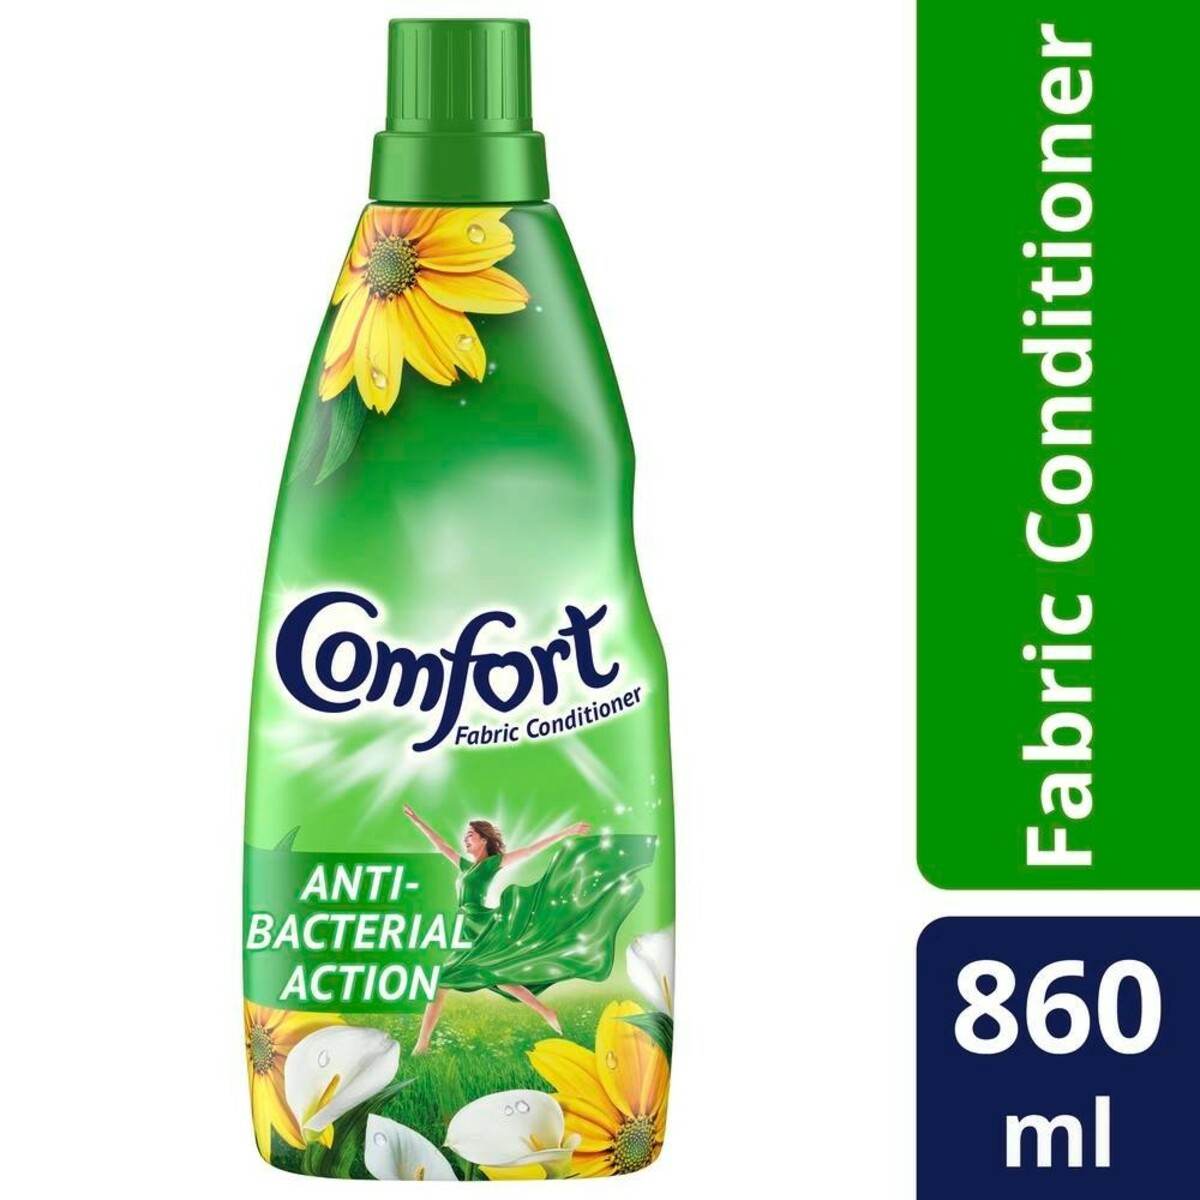 Comfort Fabric Conditioner Green 860ml